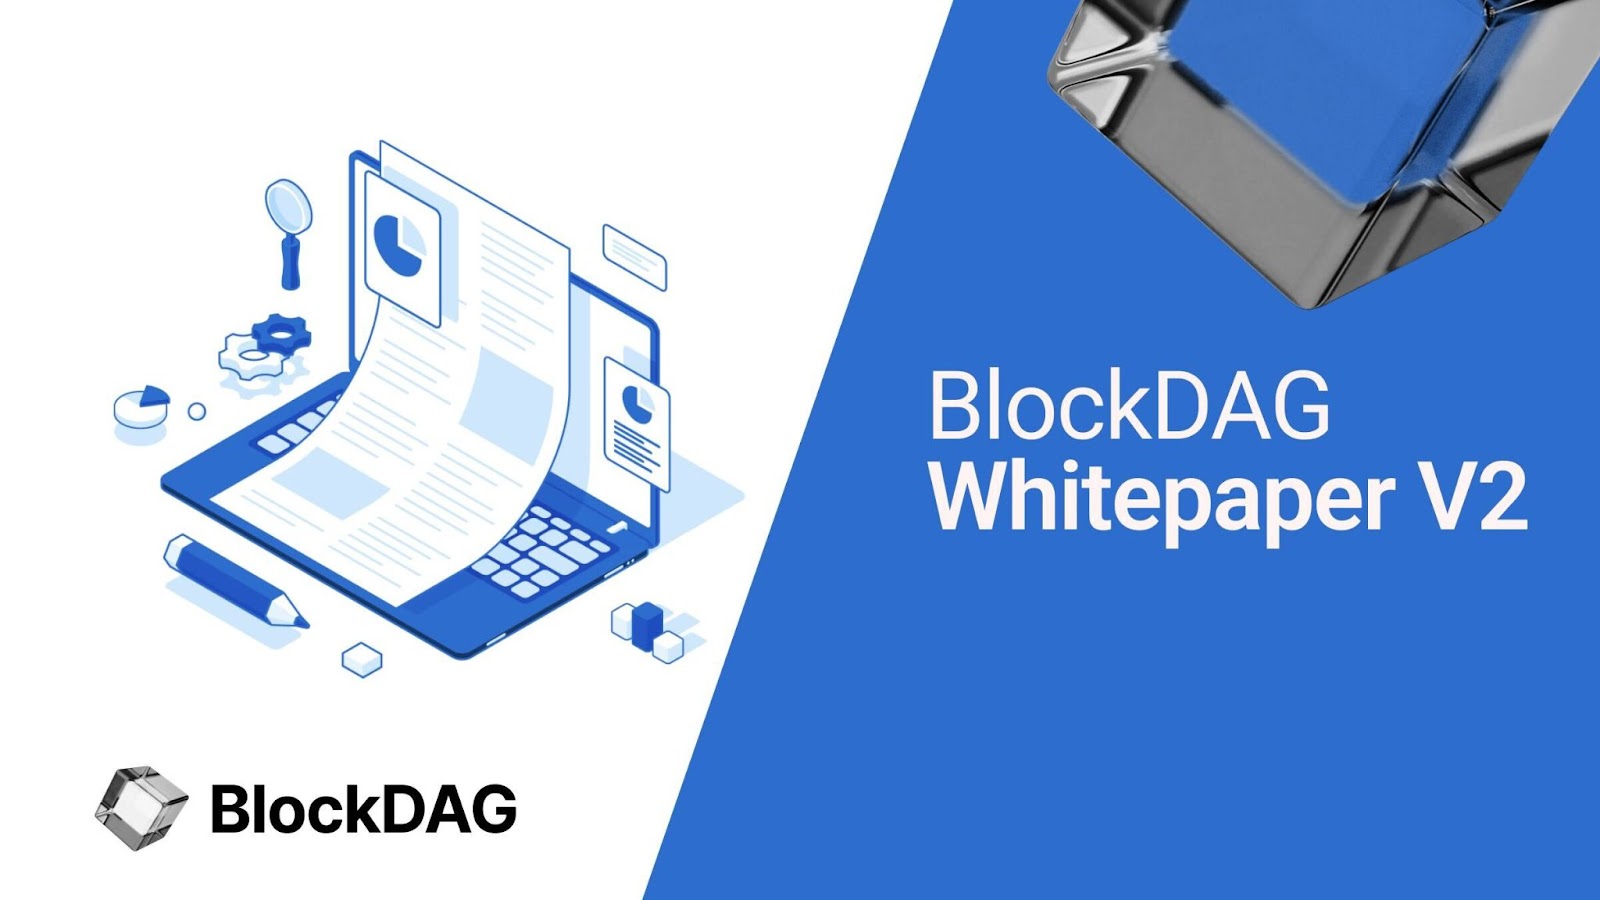 BlockDAG's Technical Whitepaper Reveals a Revolutionary Protocol